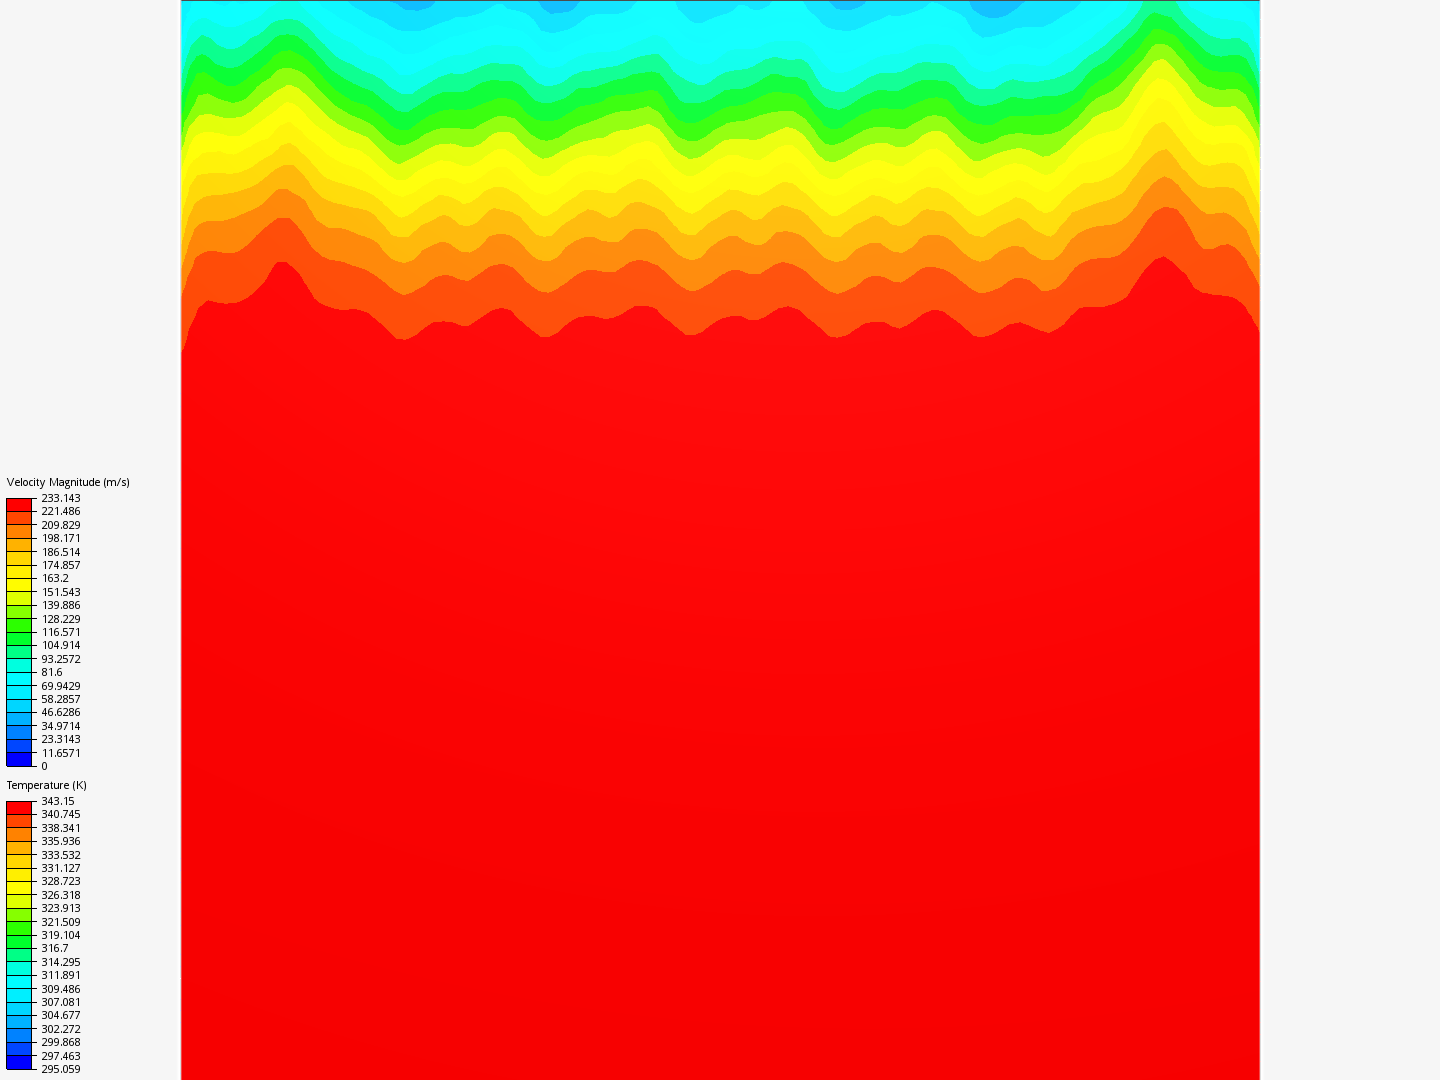 Dryer convective heat flow image